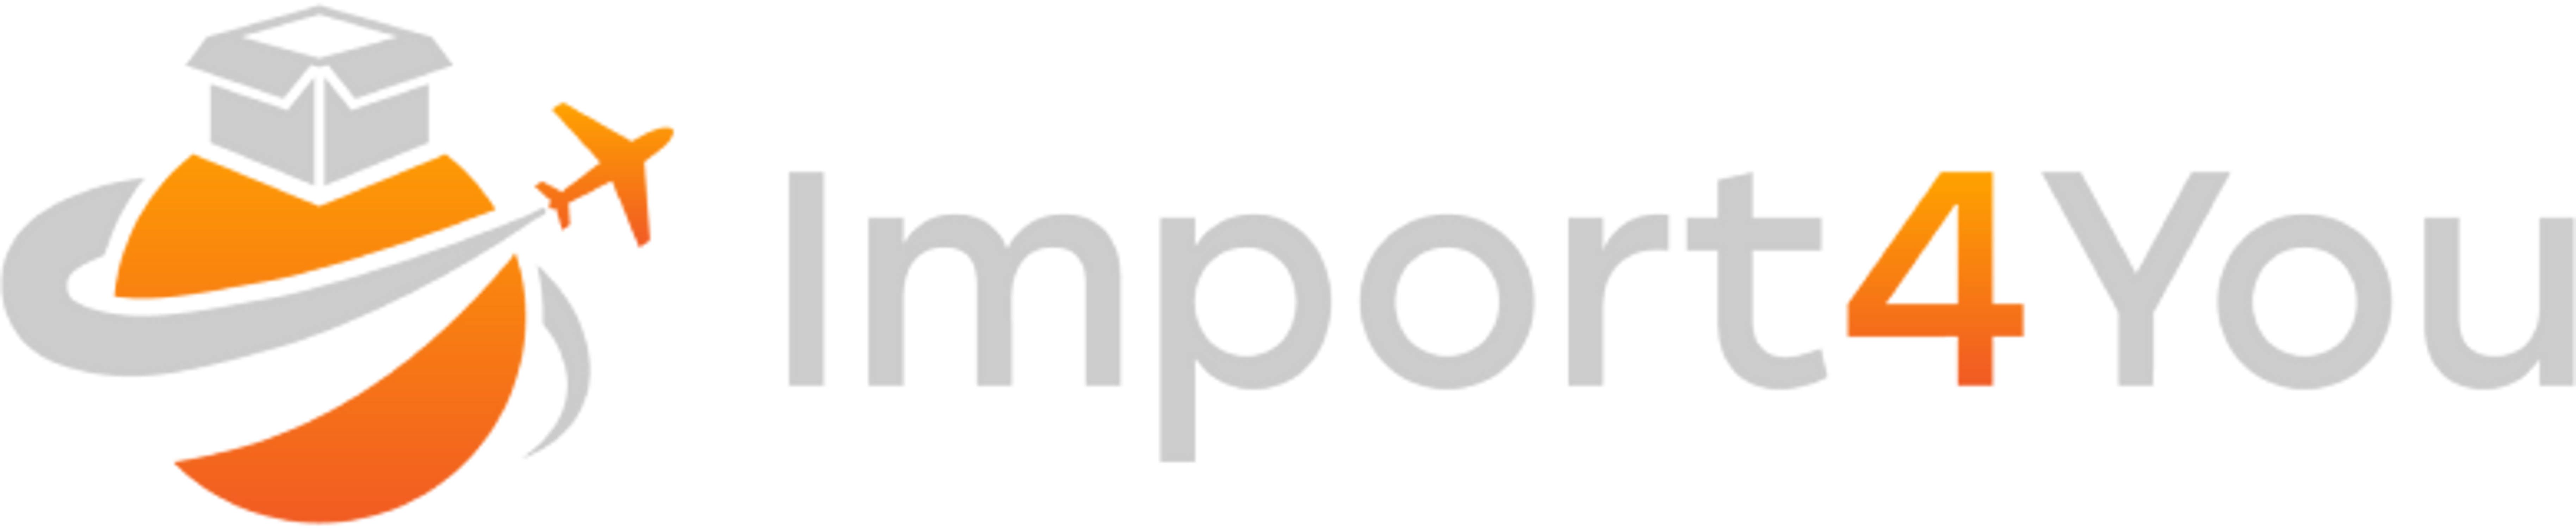 Cropped logo for A fully user centered logistics platform